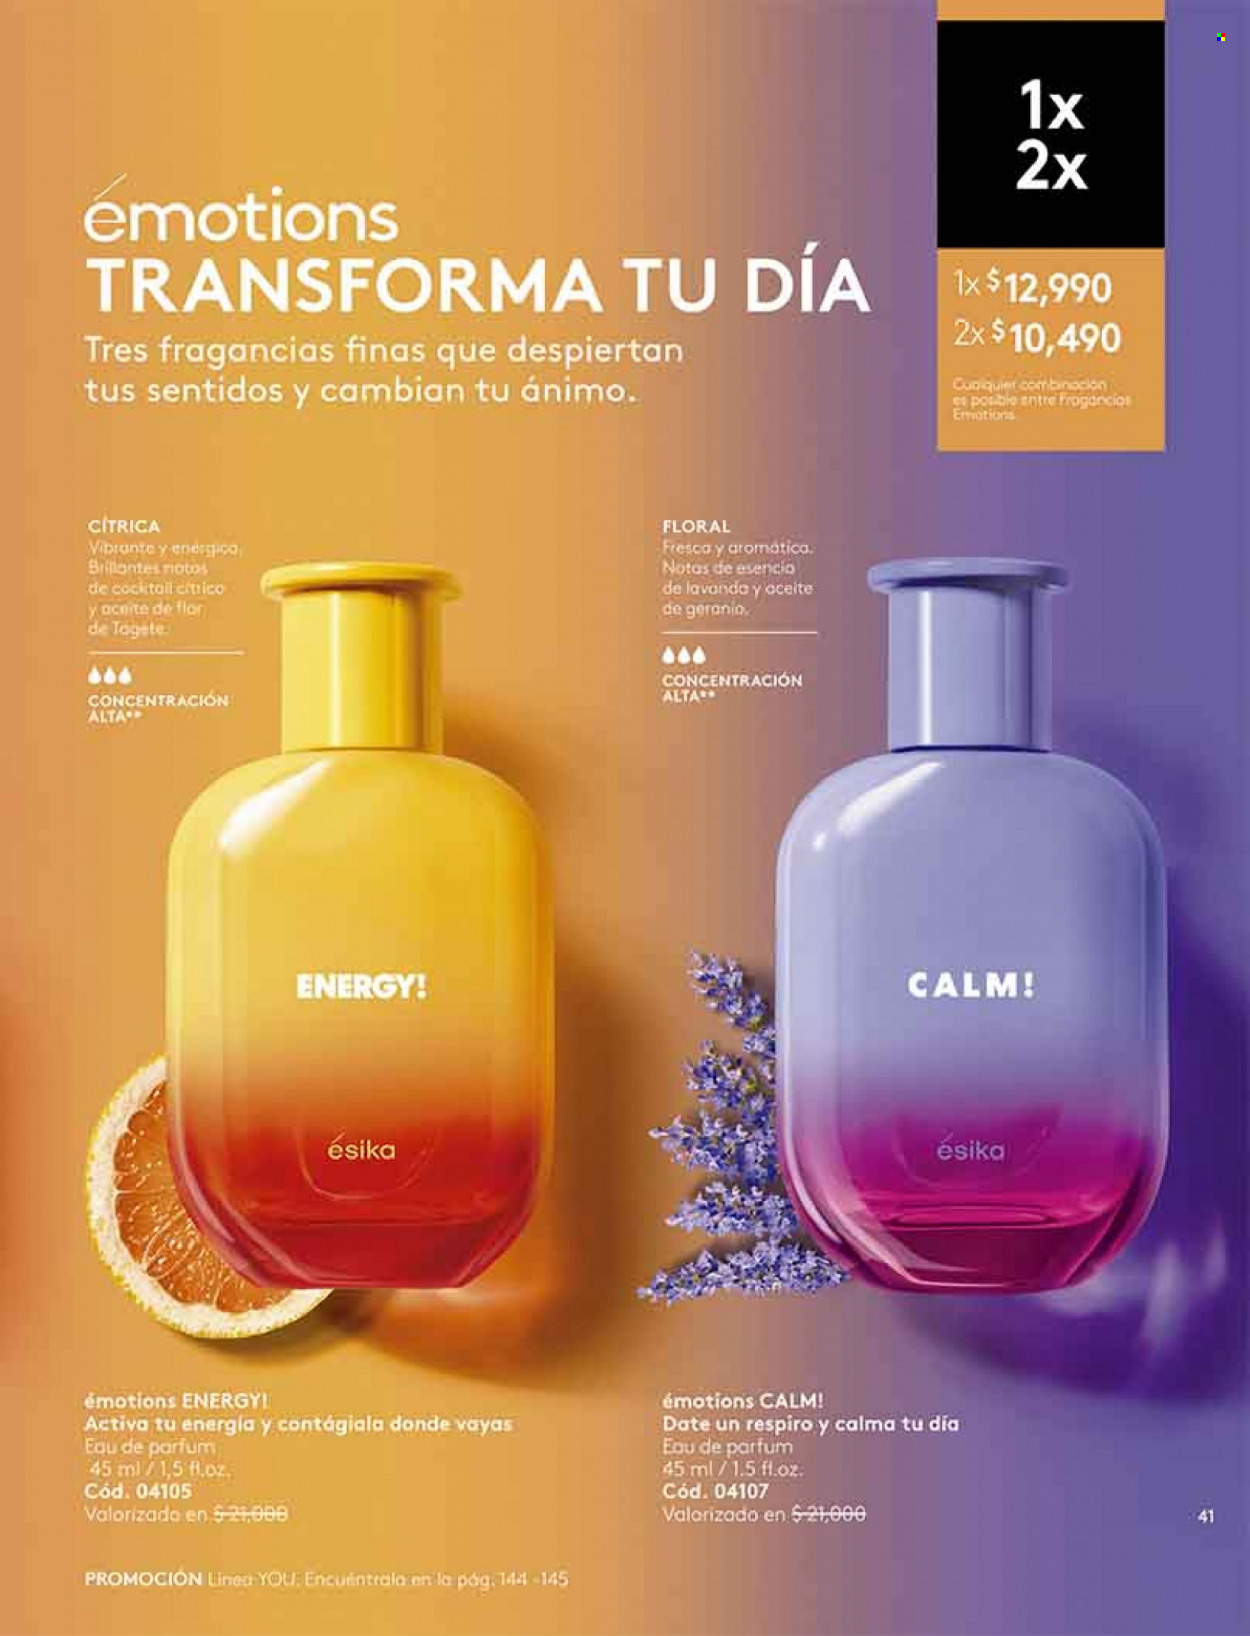 Catálogo Ésika - Ventas - perfume. Página 41.